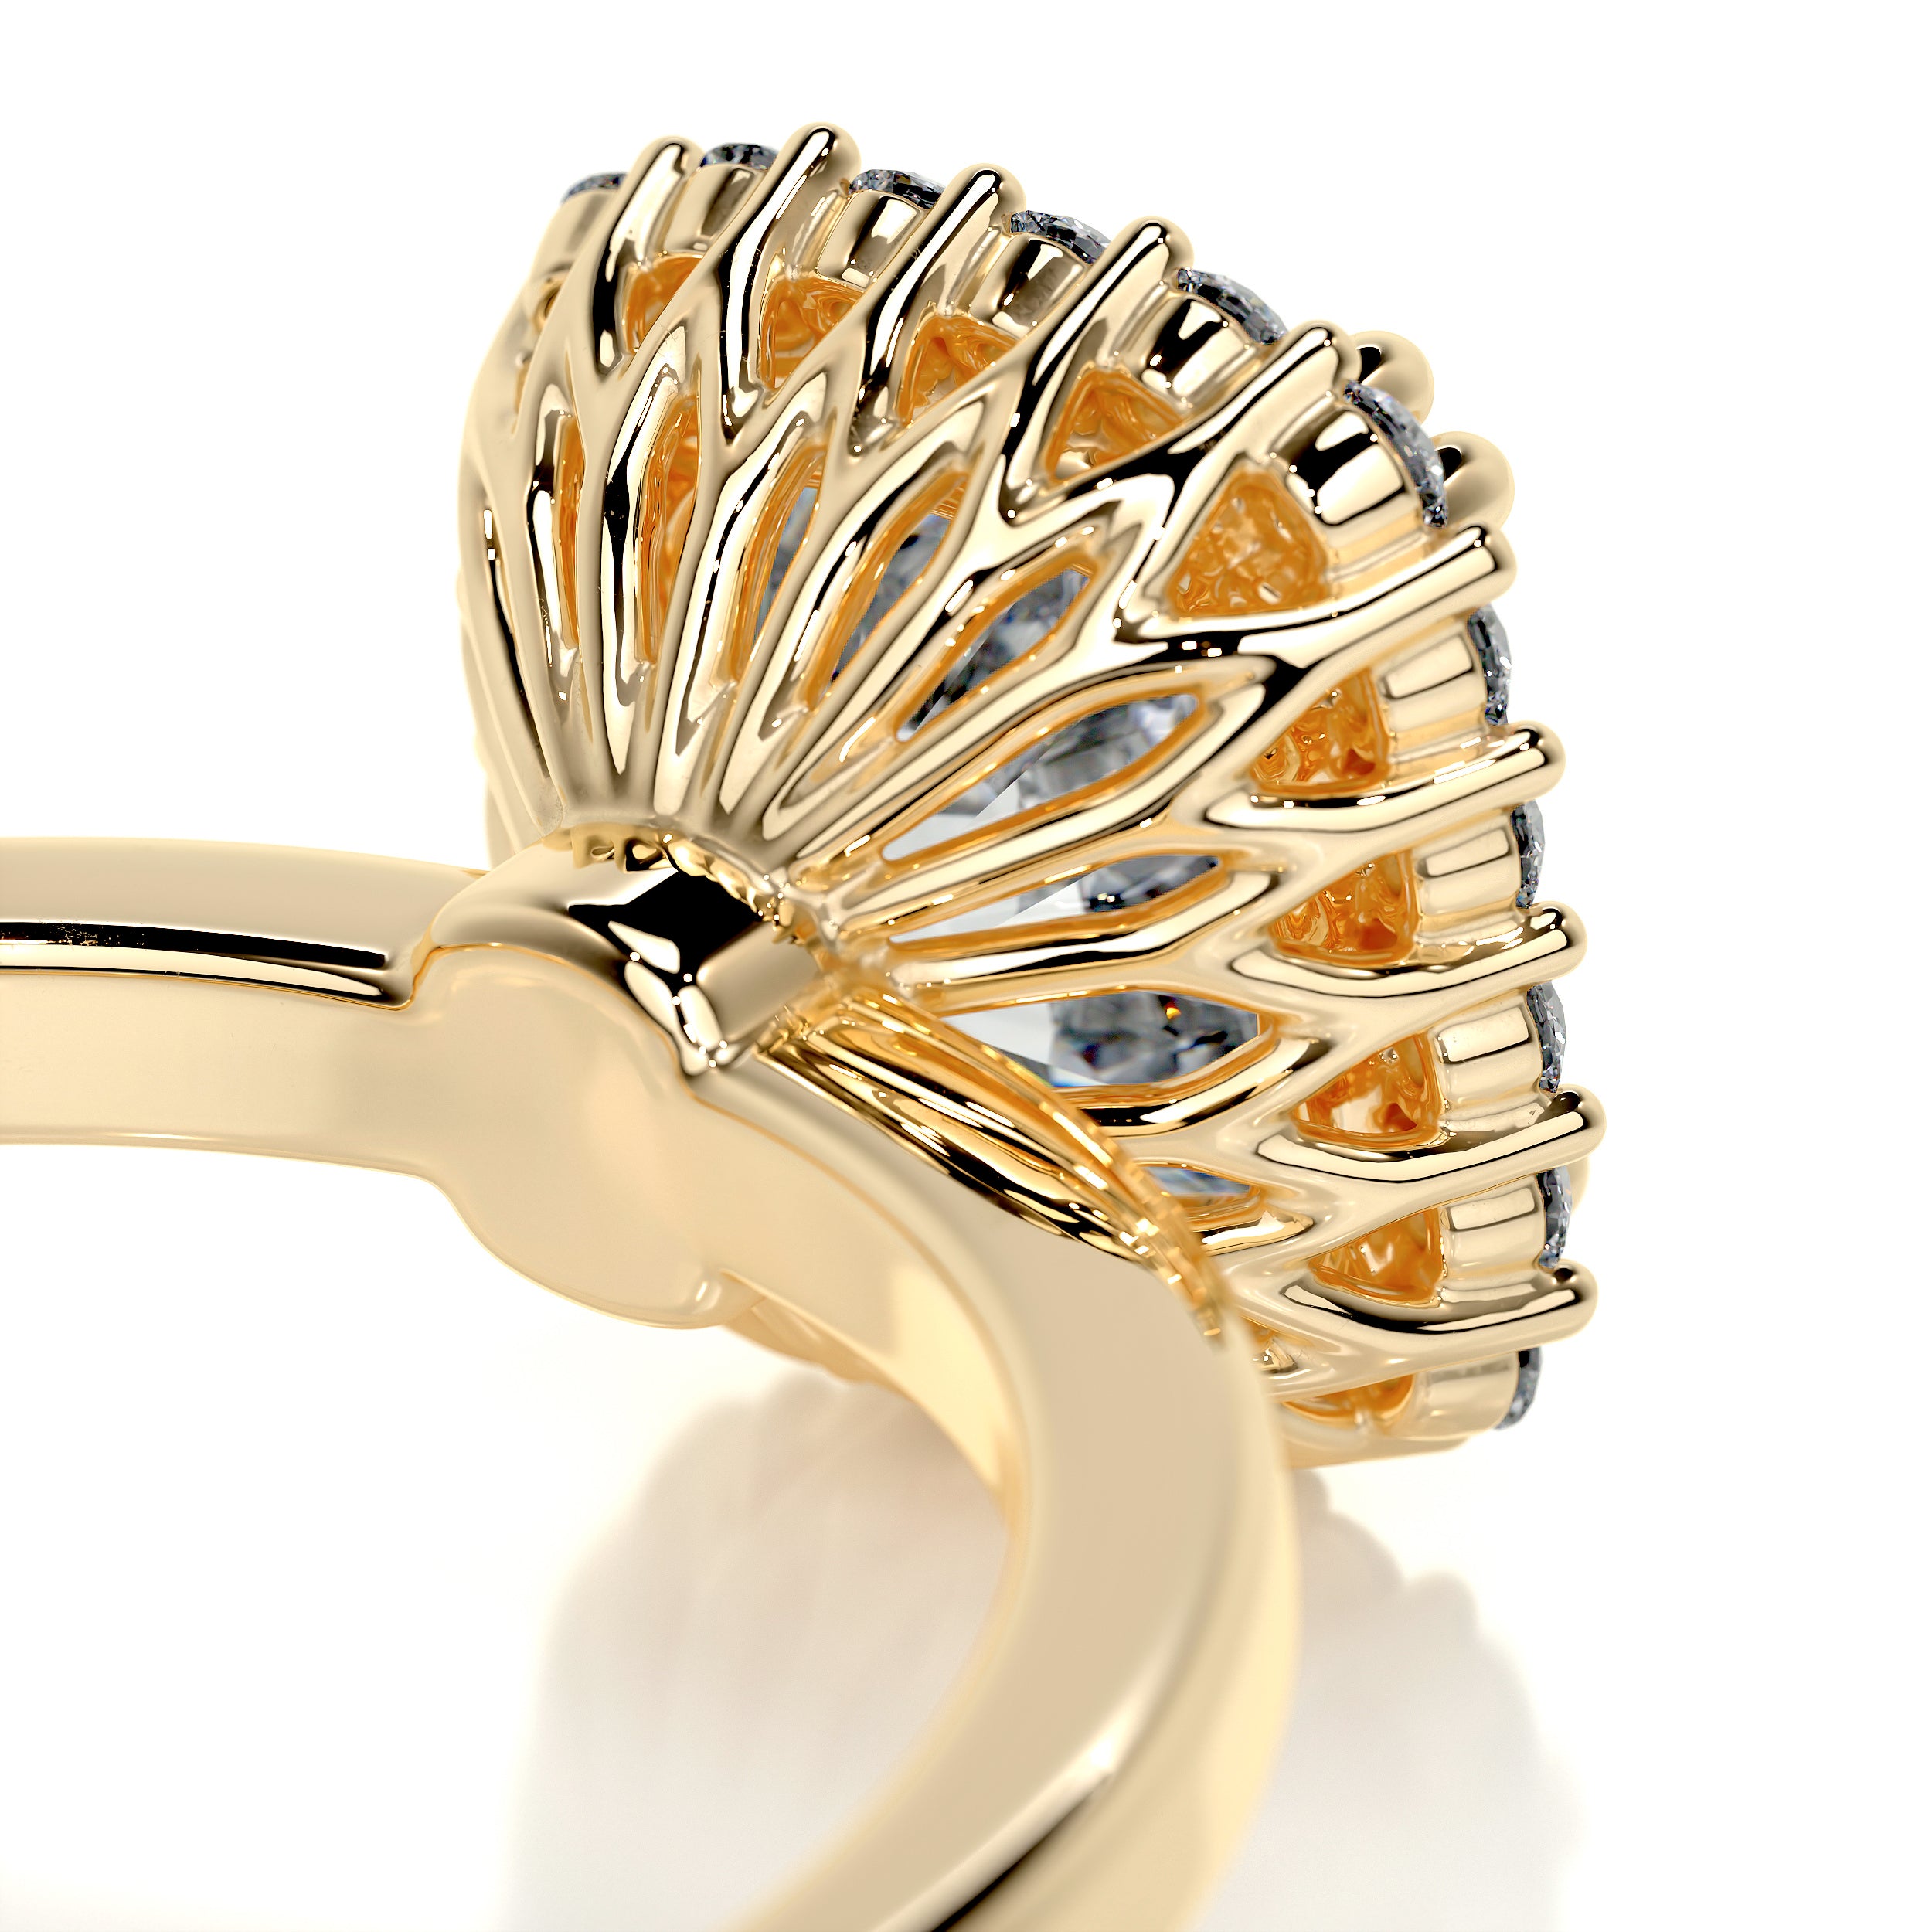 Emery Diamond Engagement Ring - 18K Yellow Gold